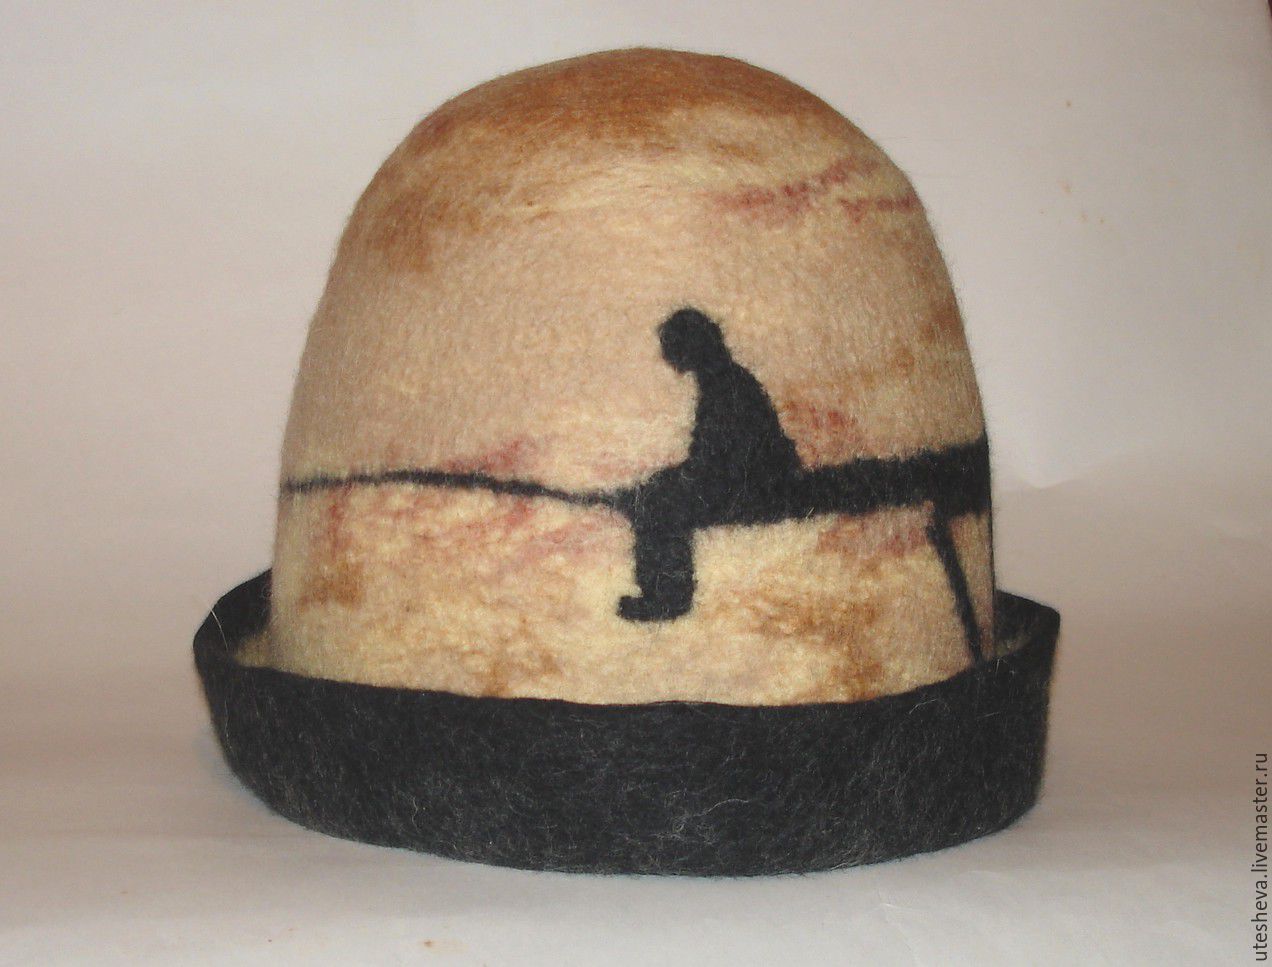 Валяние шапок из шерсти: мастер класс шапки ушанки для бани